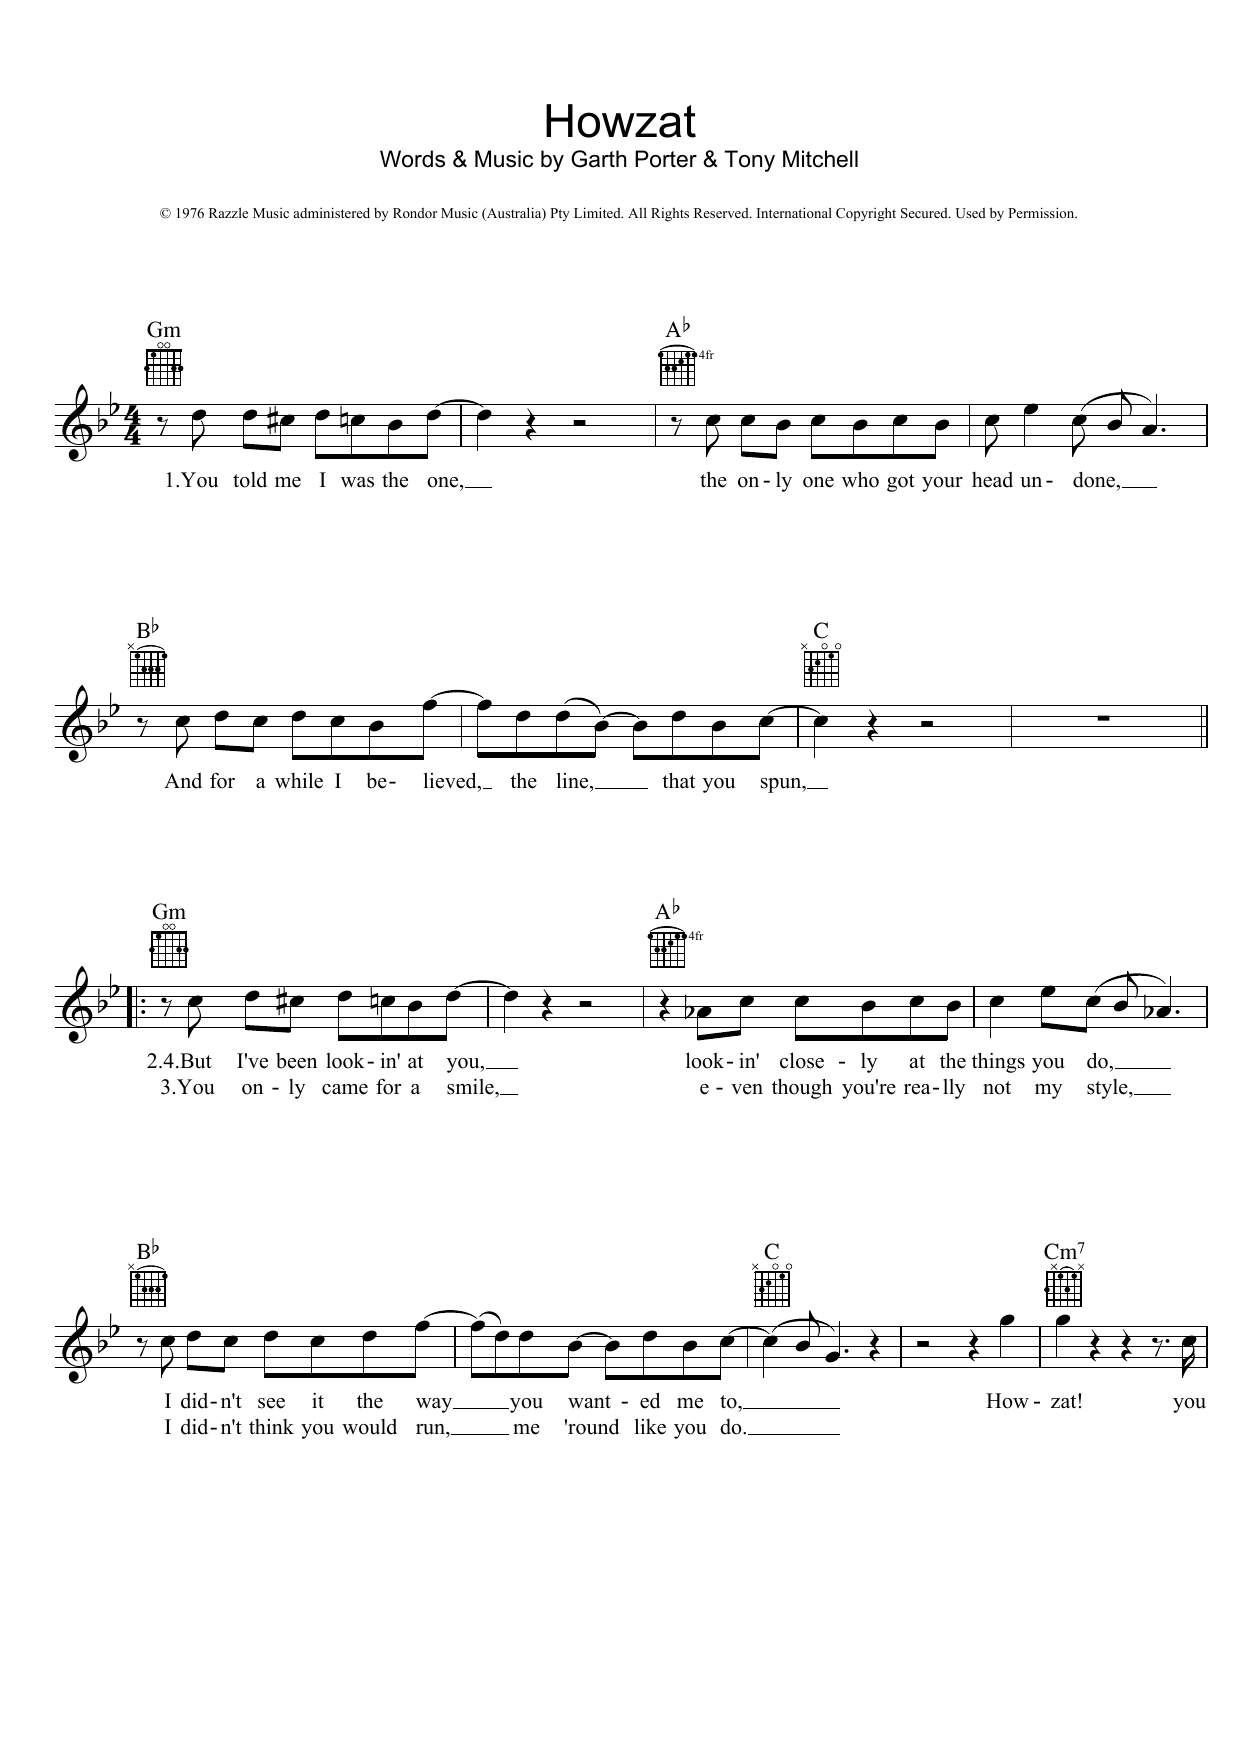 Sherbet Howzat Sheet Music Notes & Chords for Melody Line, Lyrics & Chords - Download or Print PDF